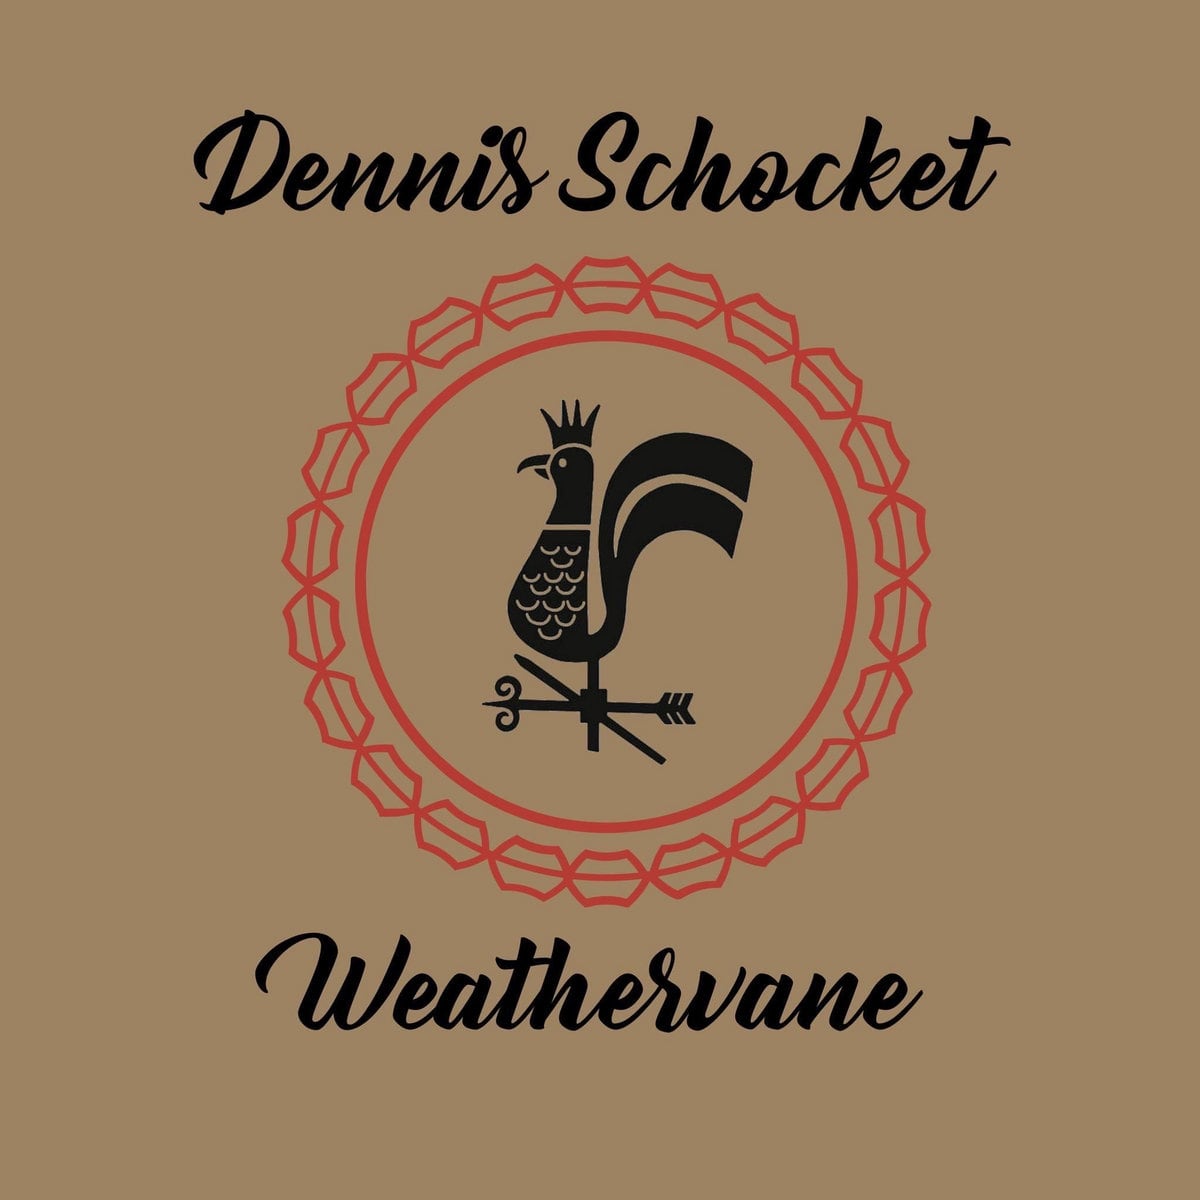 Cover of 'Weathervane', by Dennis Schocket.